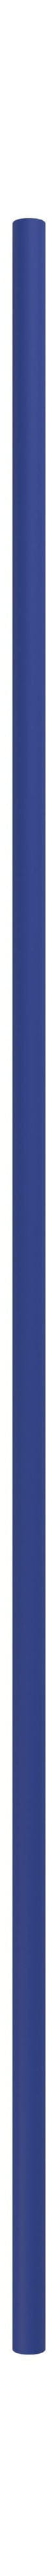 Moebe -Regalsystem/Wandregalbein 115 cm, tiefblau